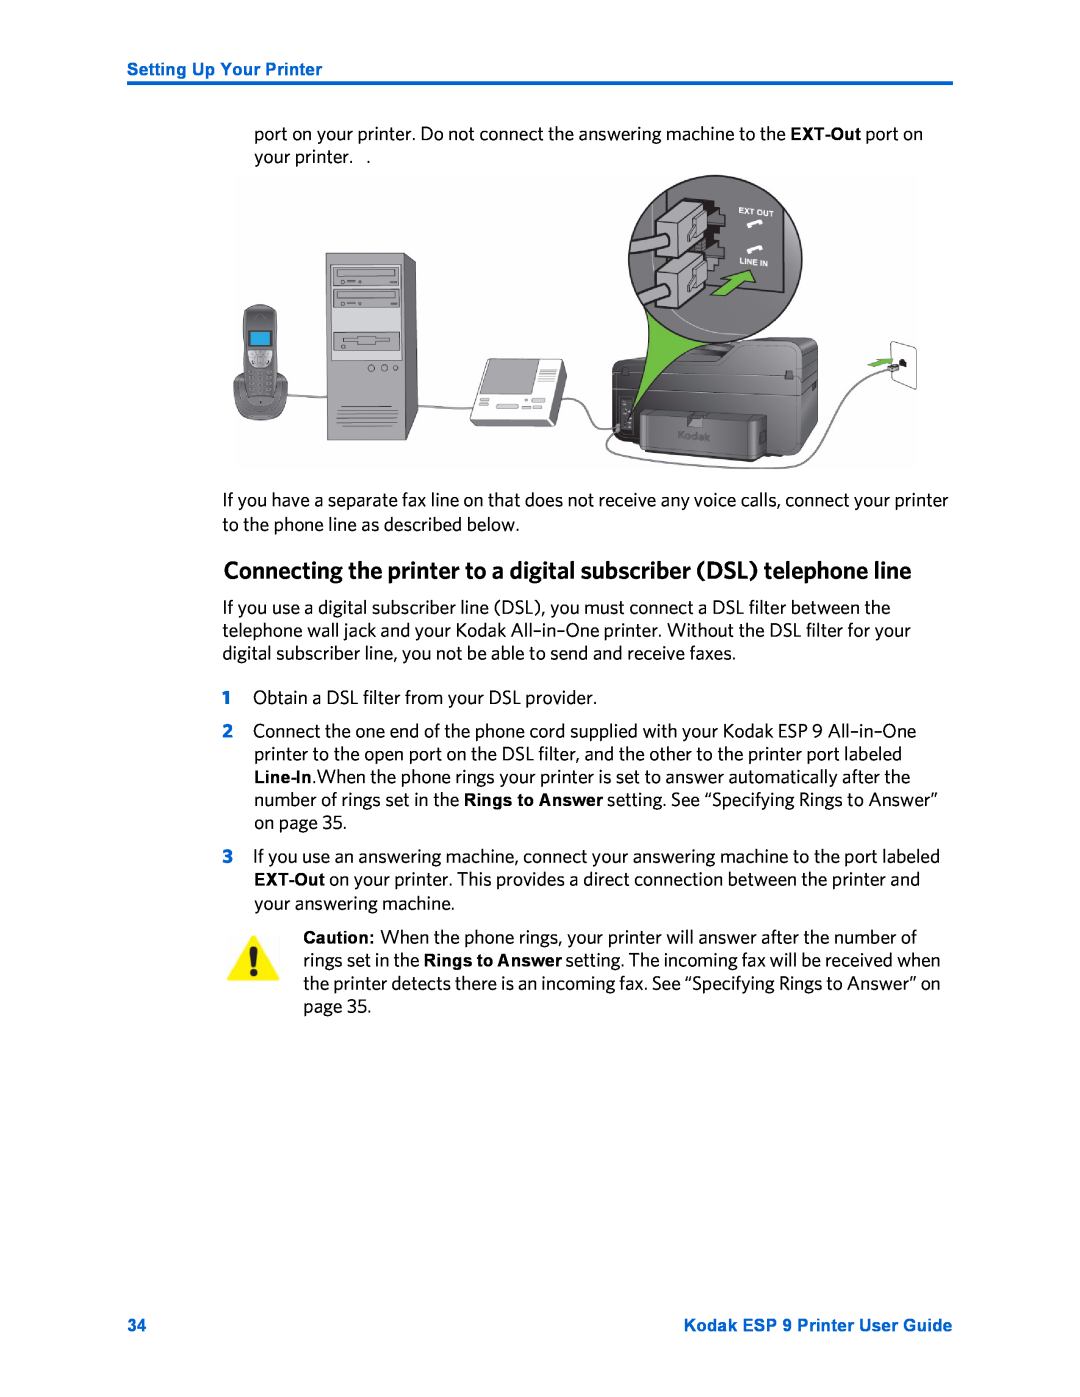 Kodak ESP 9 manual Connecting the printer to a digital subscriber DSL telephone line 